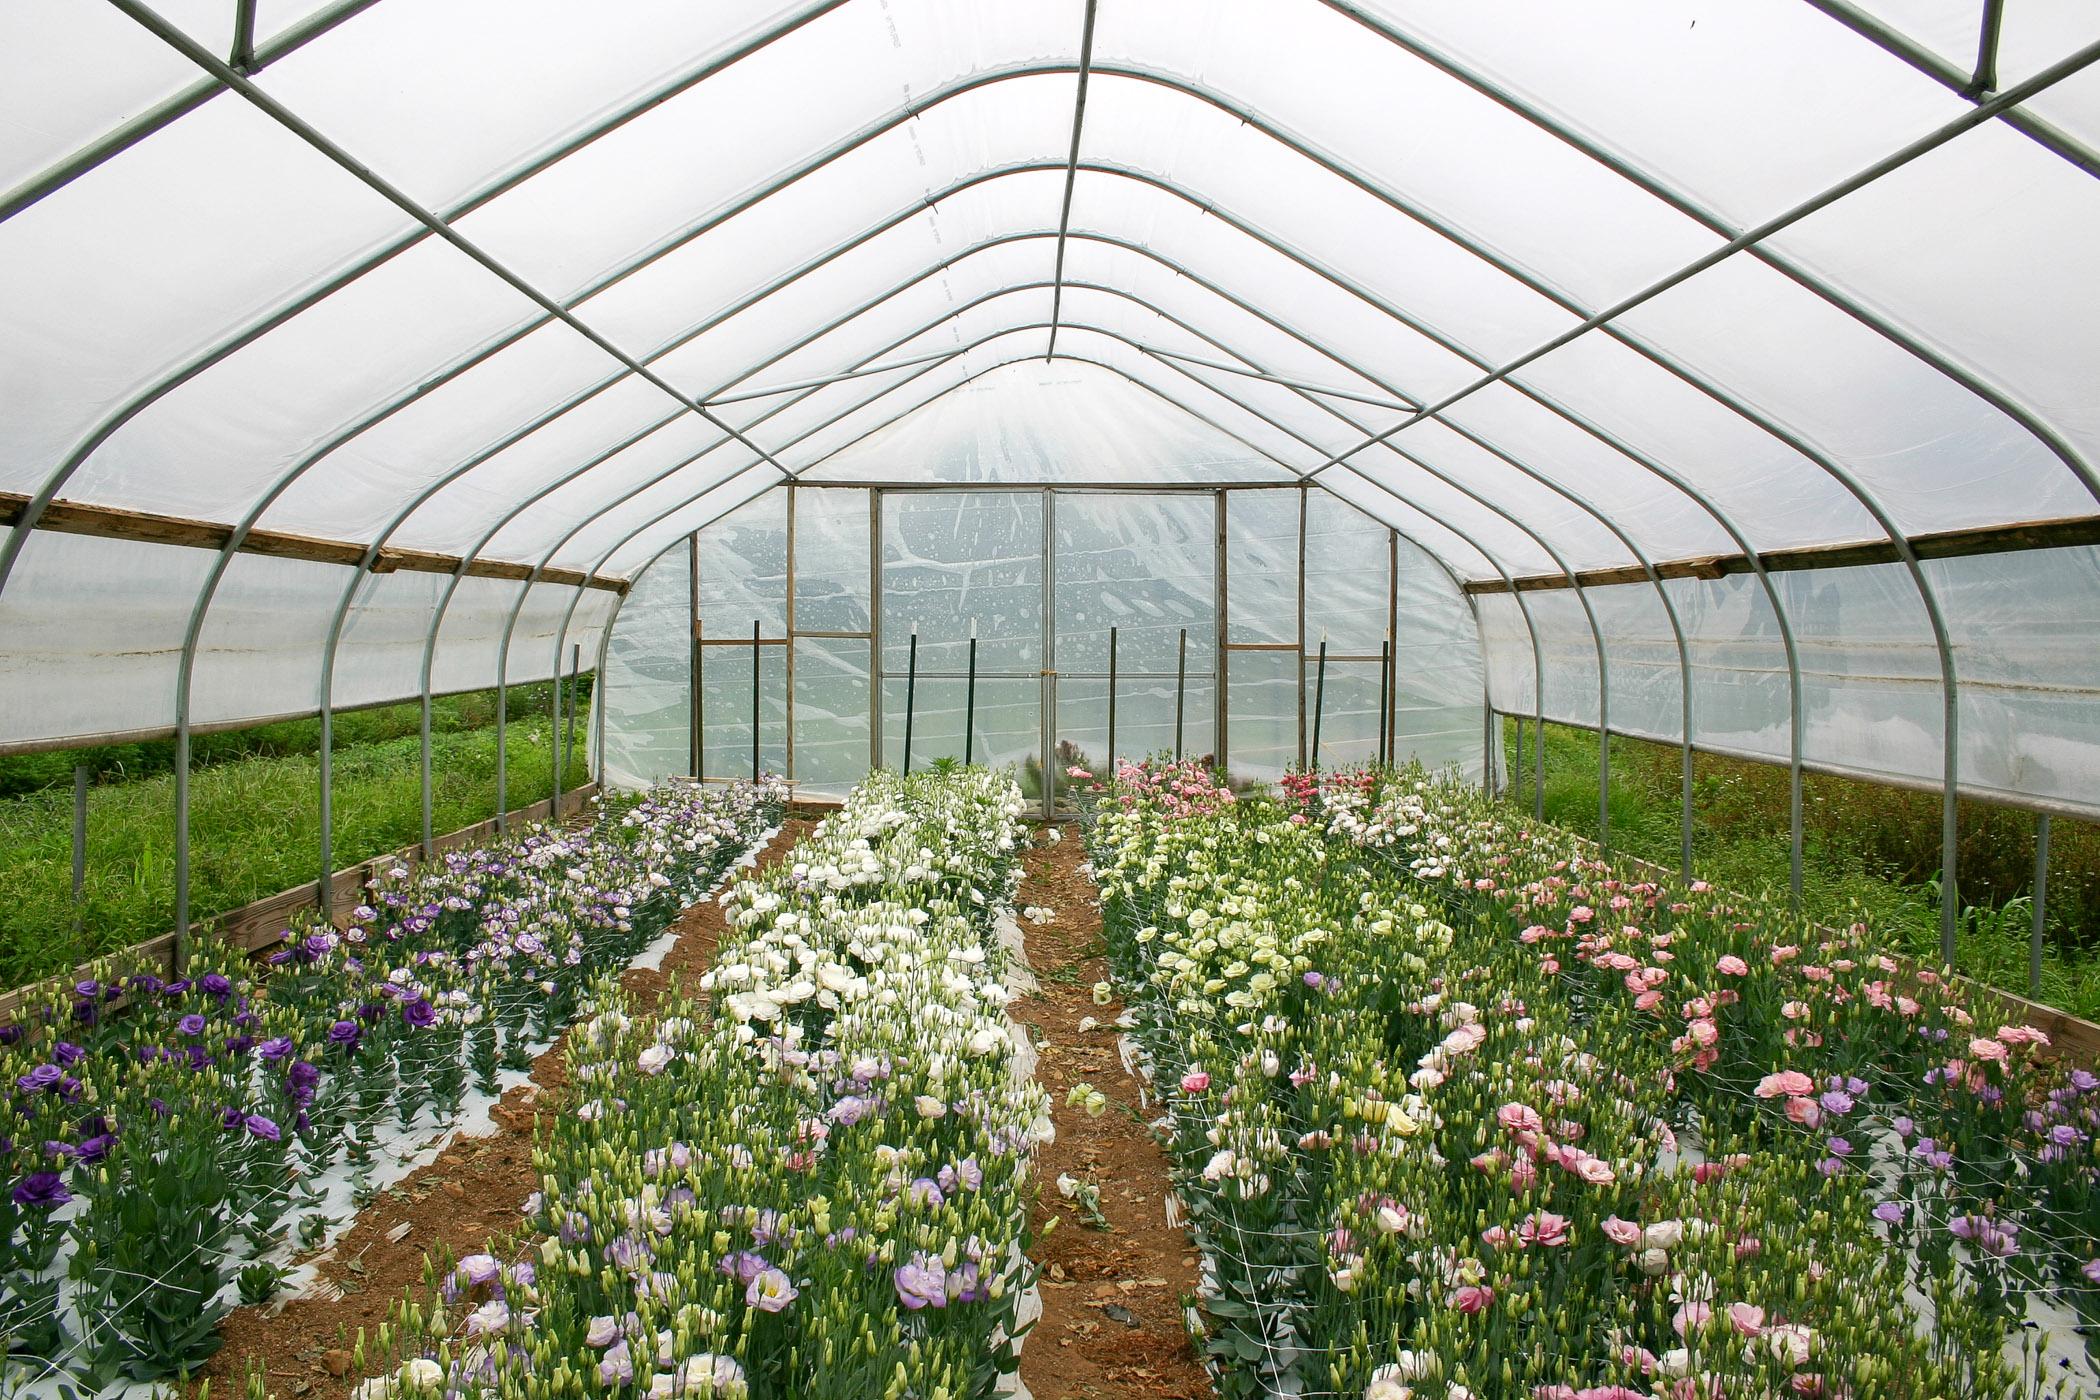 Lisianthus grown as a cut flower crop in a high tunnel